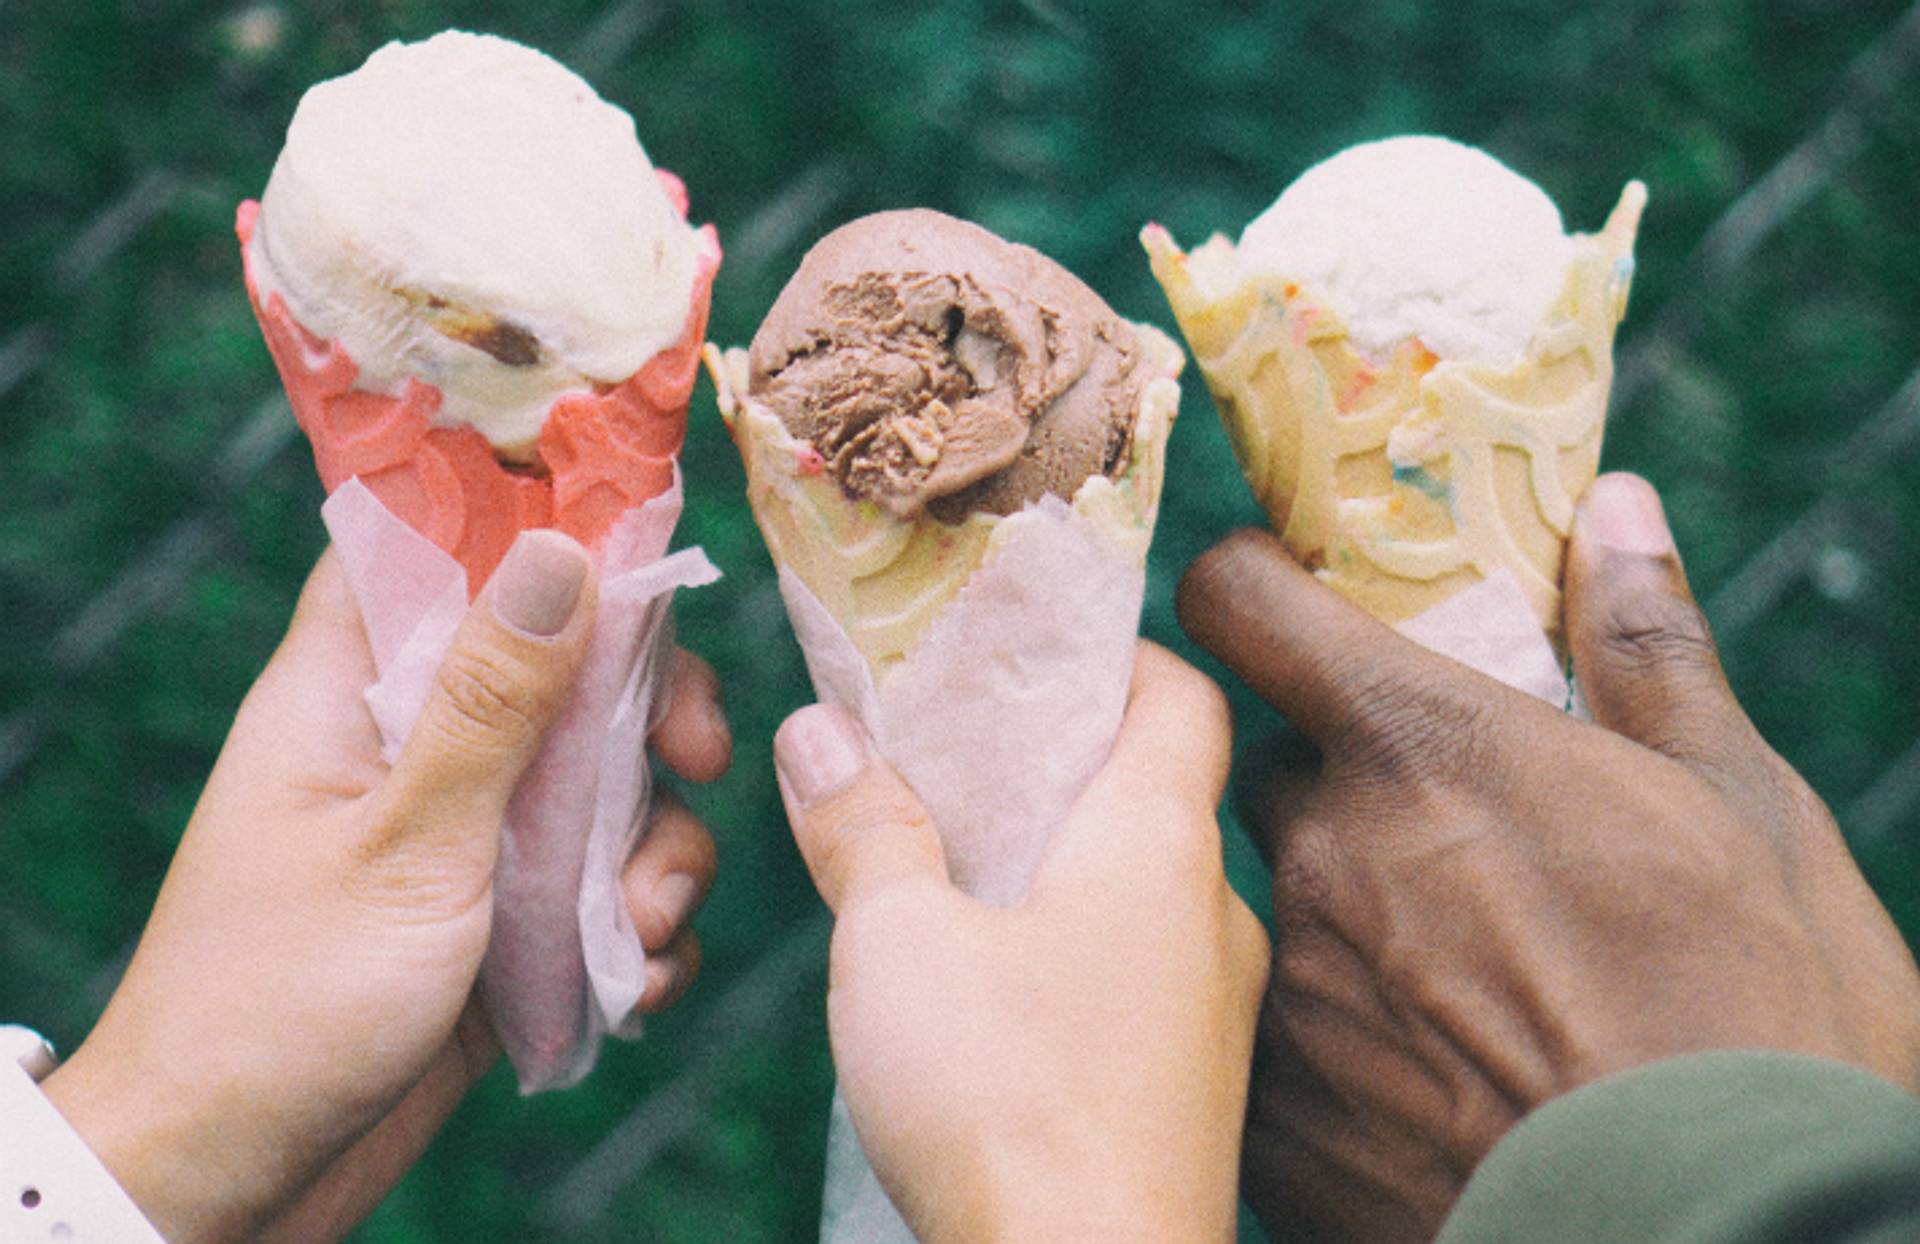 Health-conscious foodies love low-cal ice cream